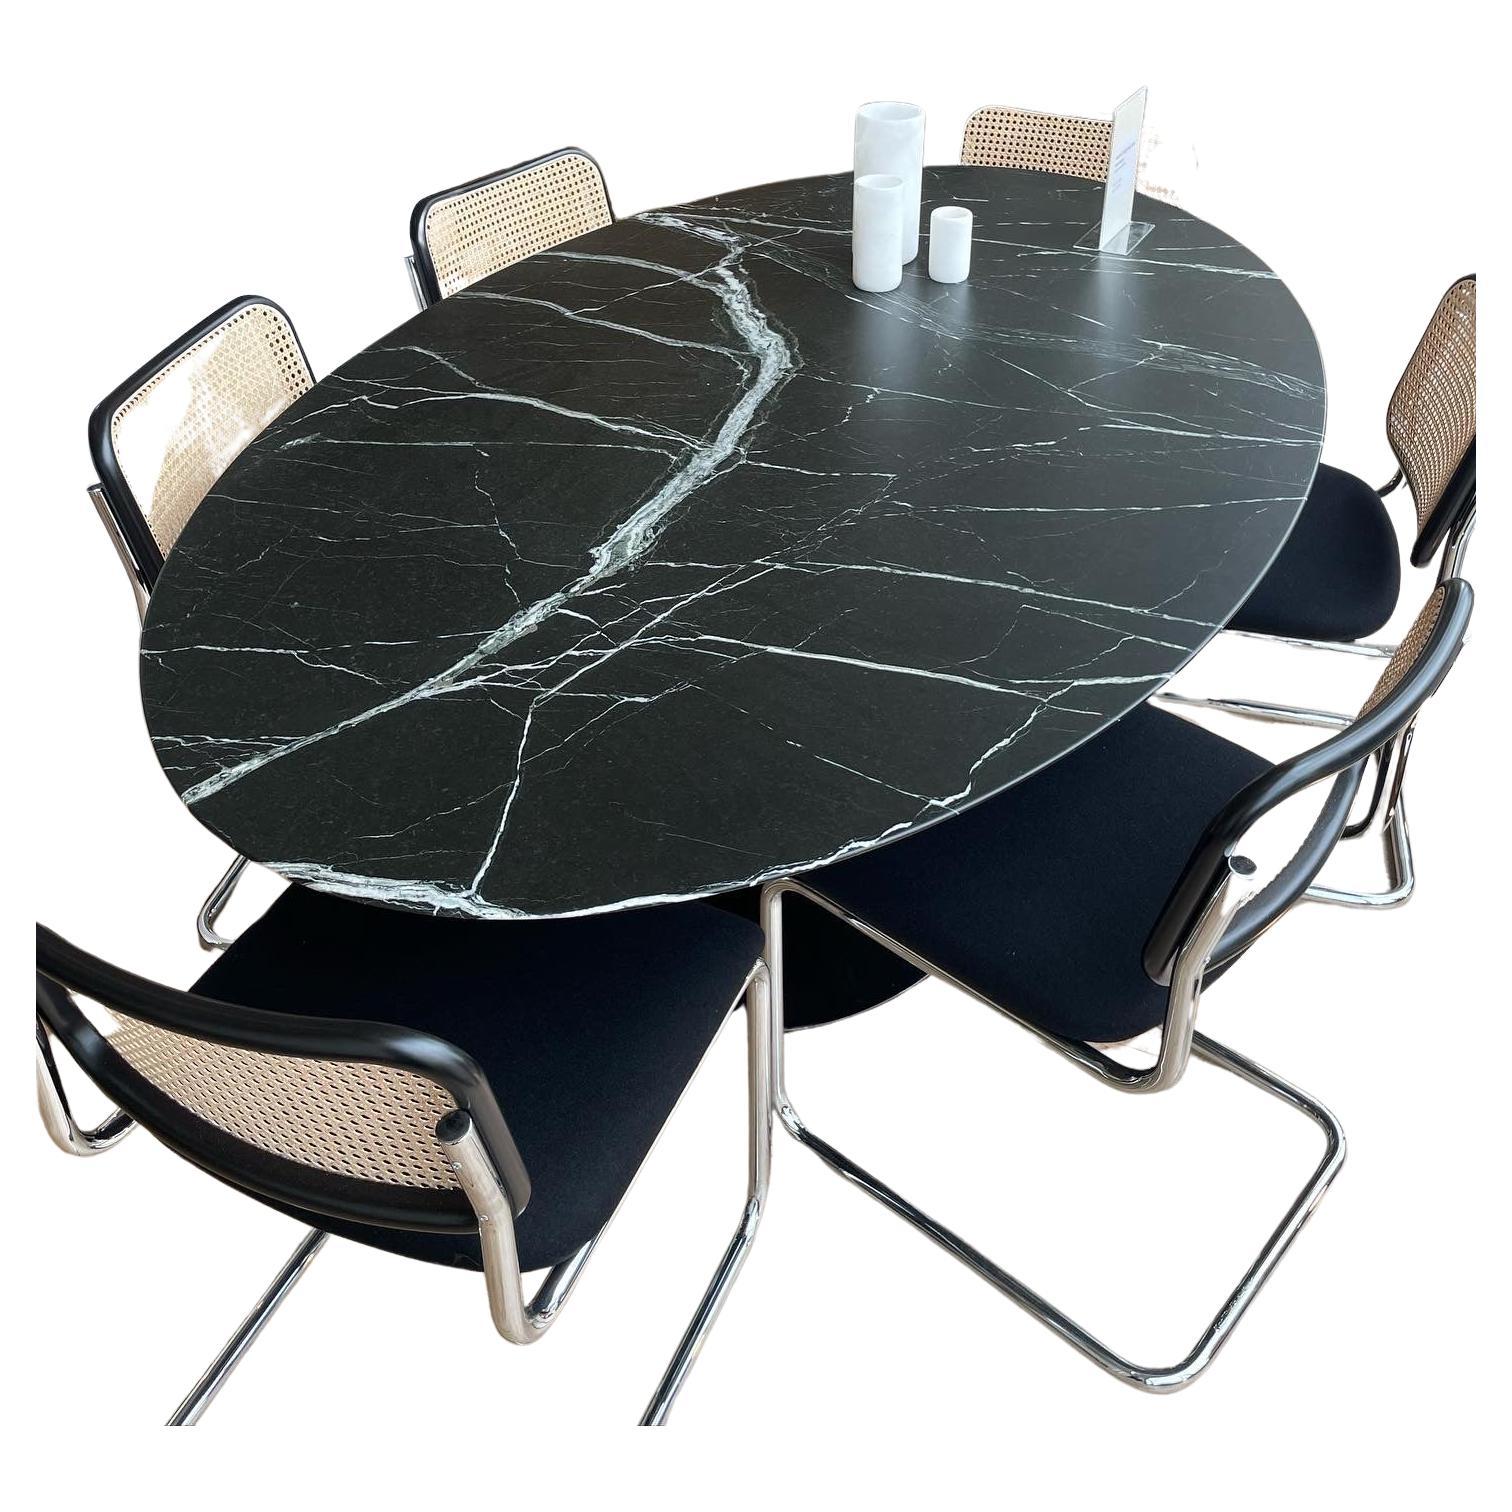 Ovaler Saarinen-Tisch mit Levanto-Marmorplatte